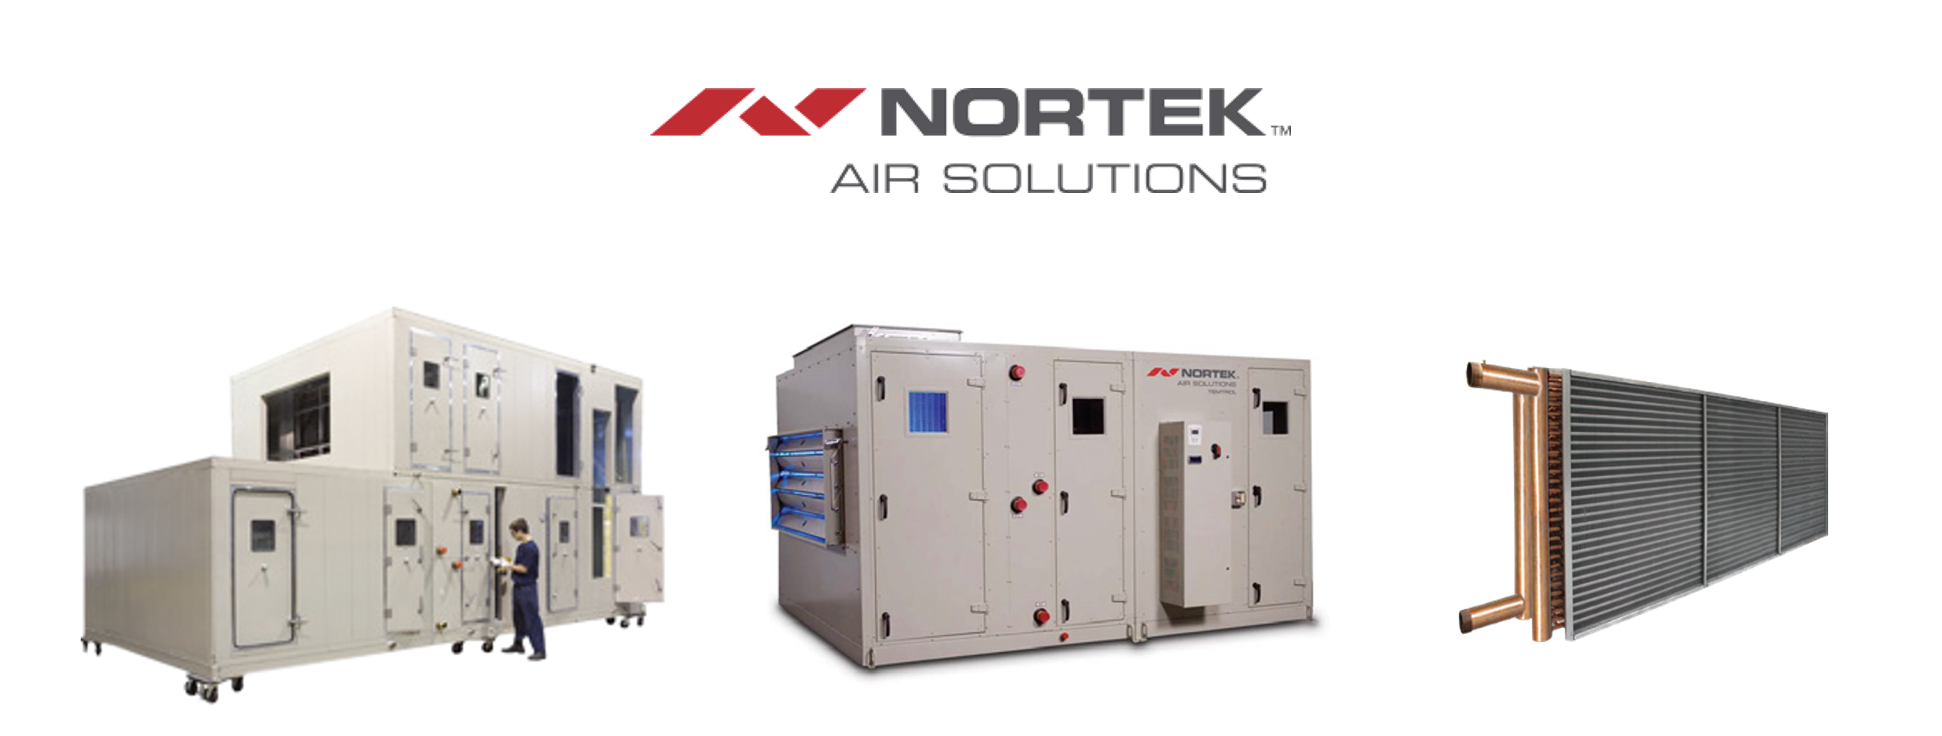 Nortek Air Solutions AHU Feature